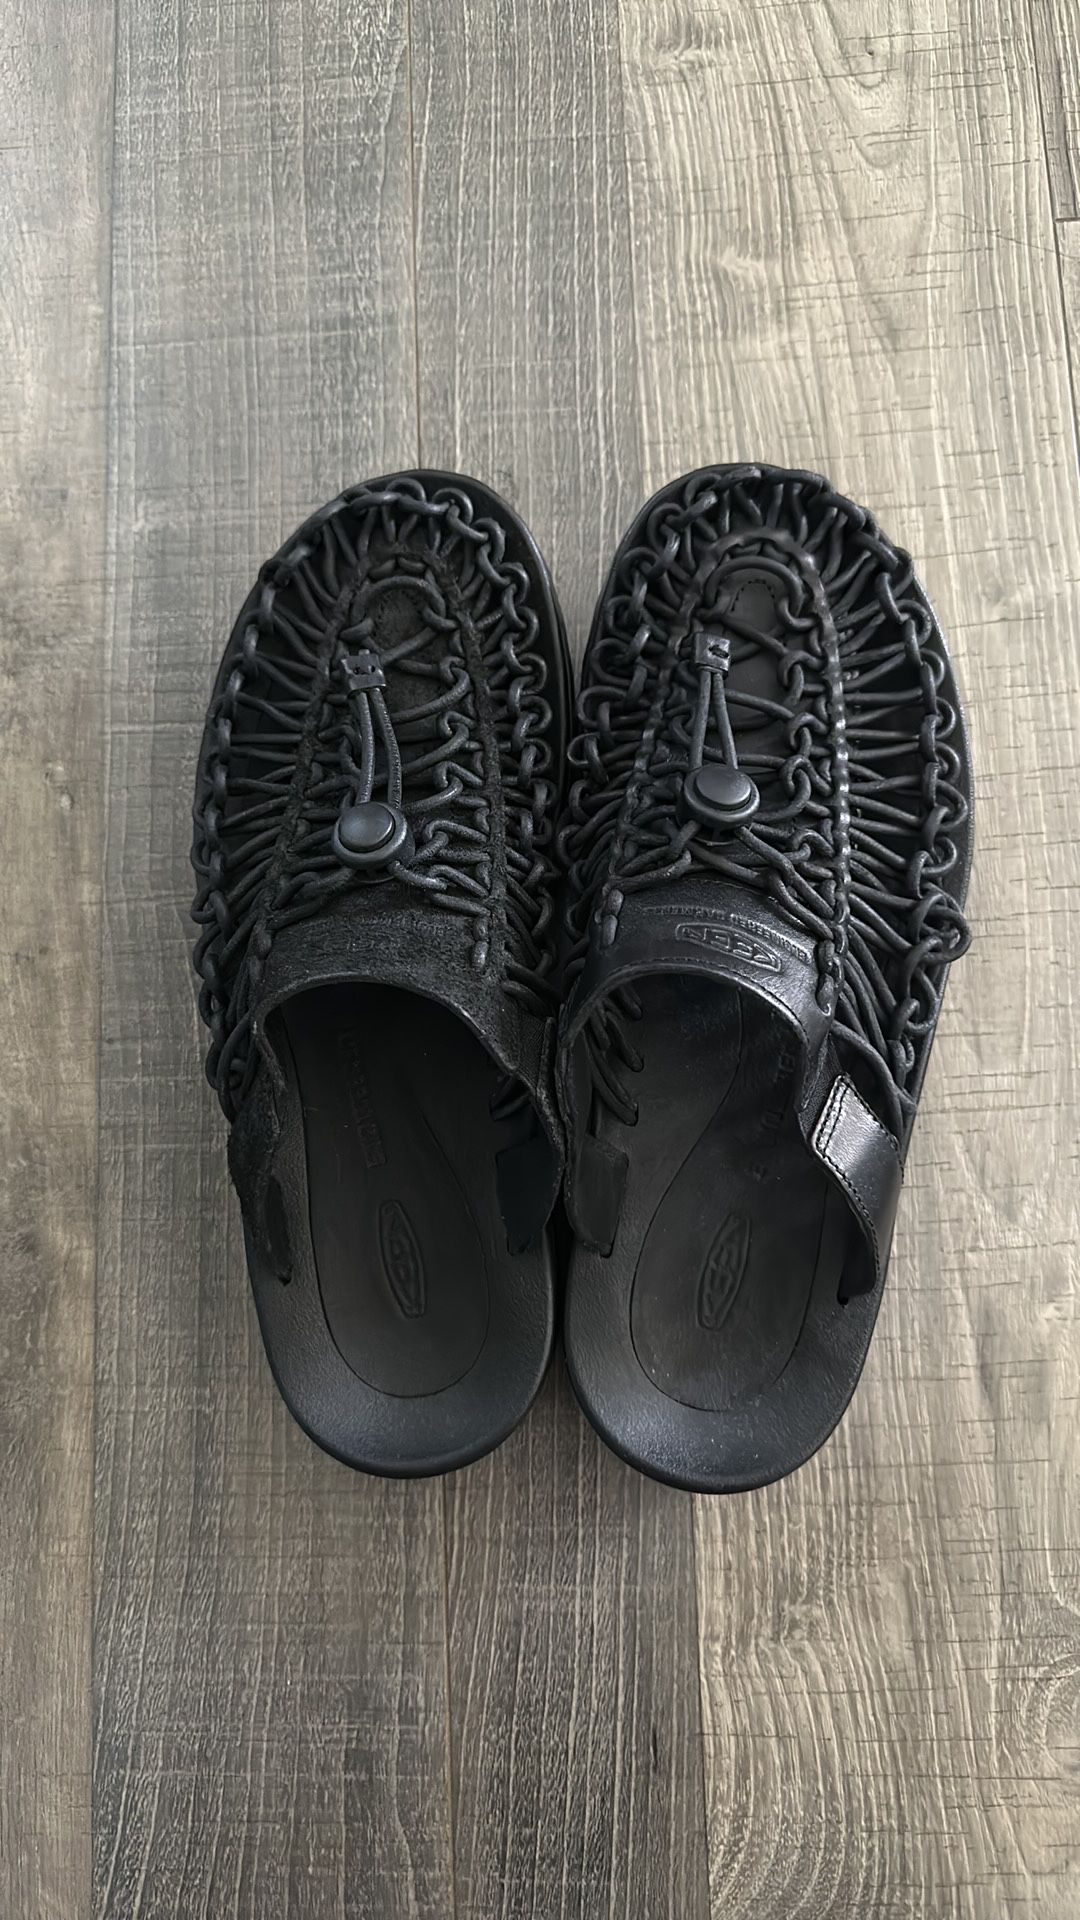 Keen Women’s Uneek Premium Leather Slides Size: 7.5 in Black